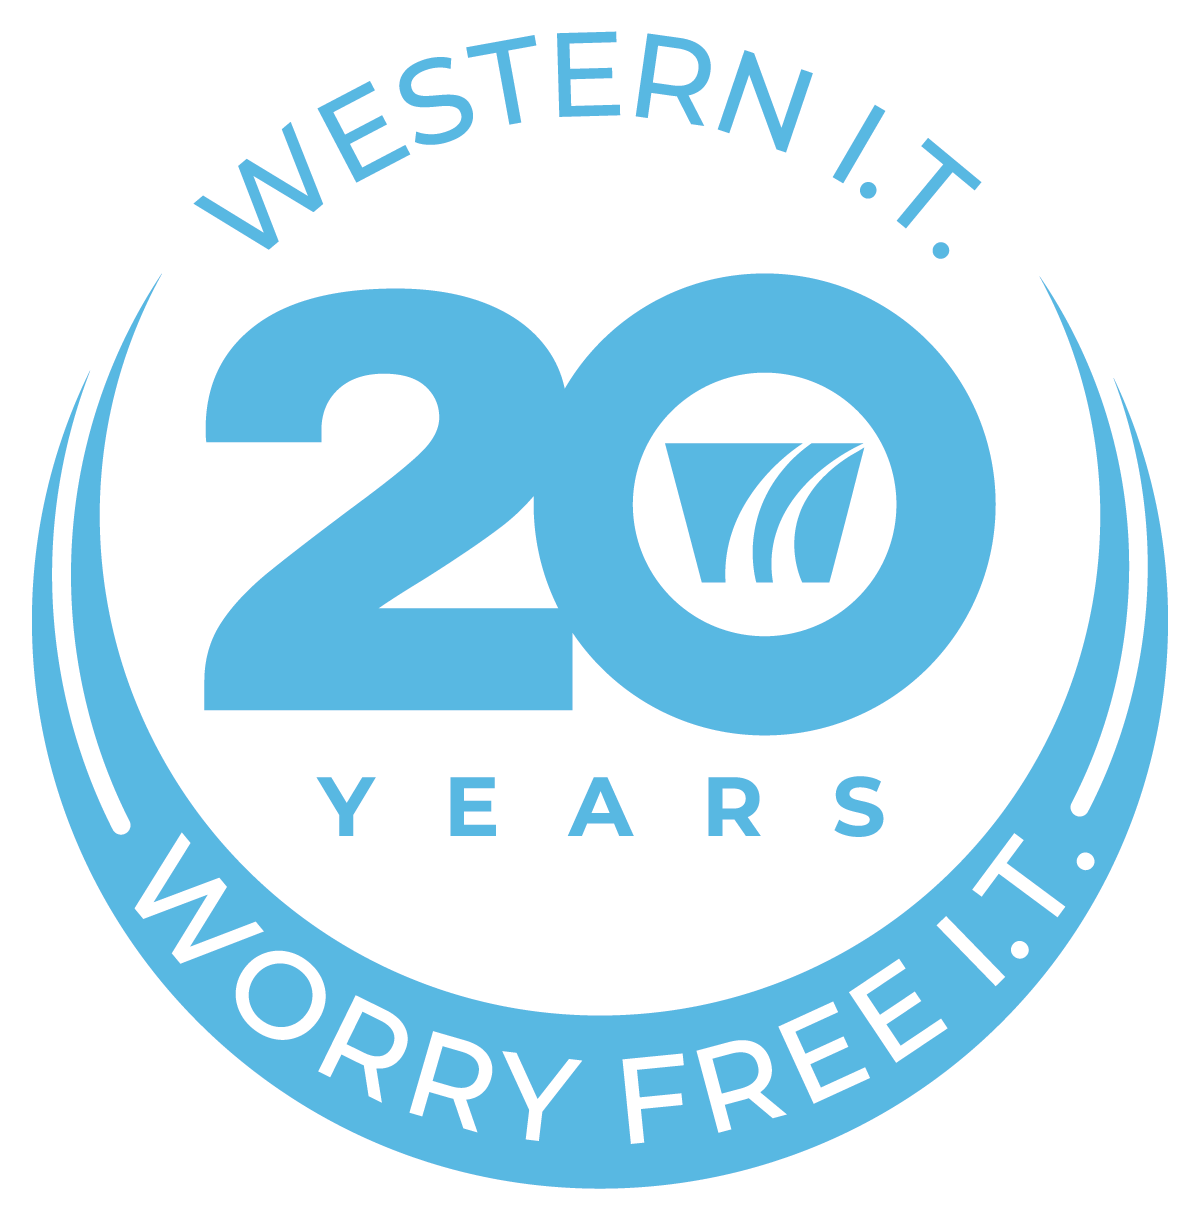 Western I.T. 20 year Anniversary